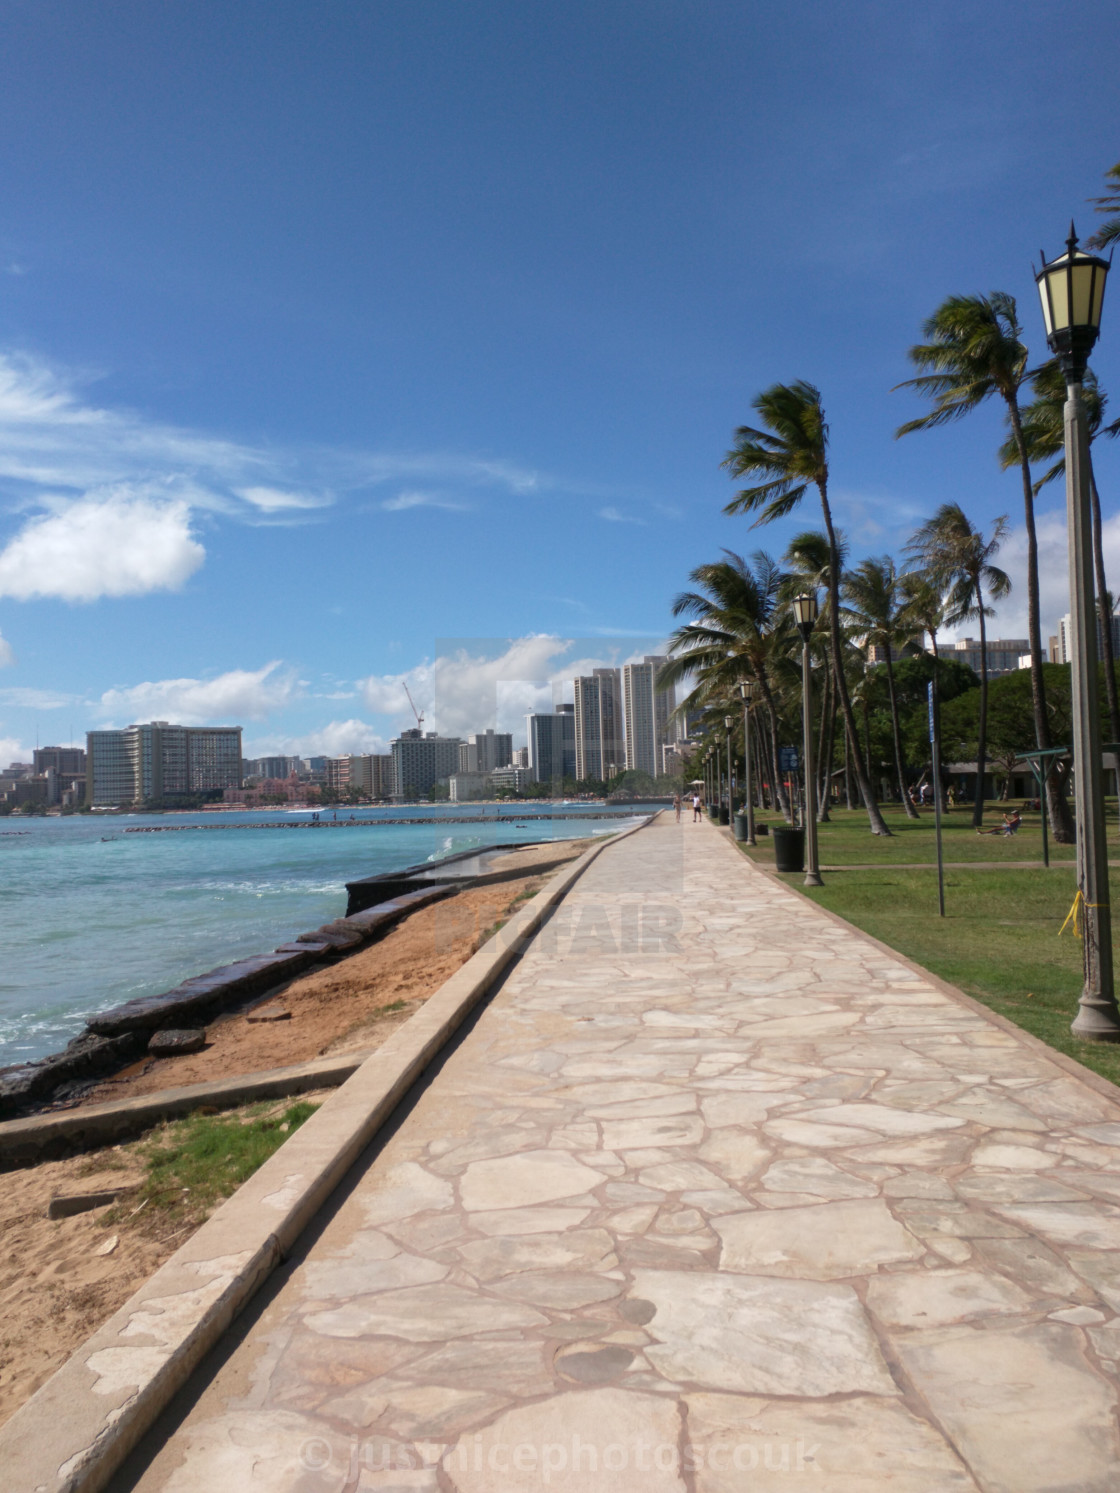 "Hawaii - Honolulu Bay from the front boardwalk" stock image